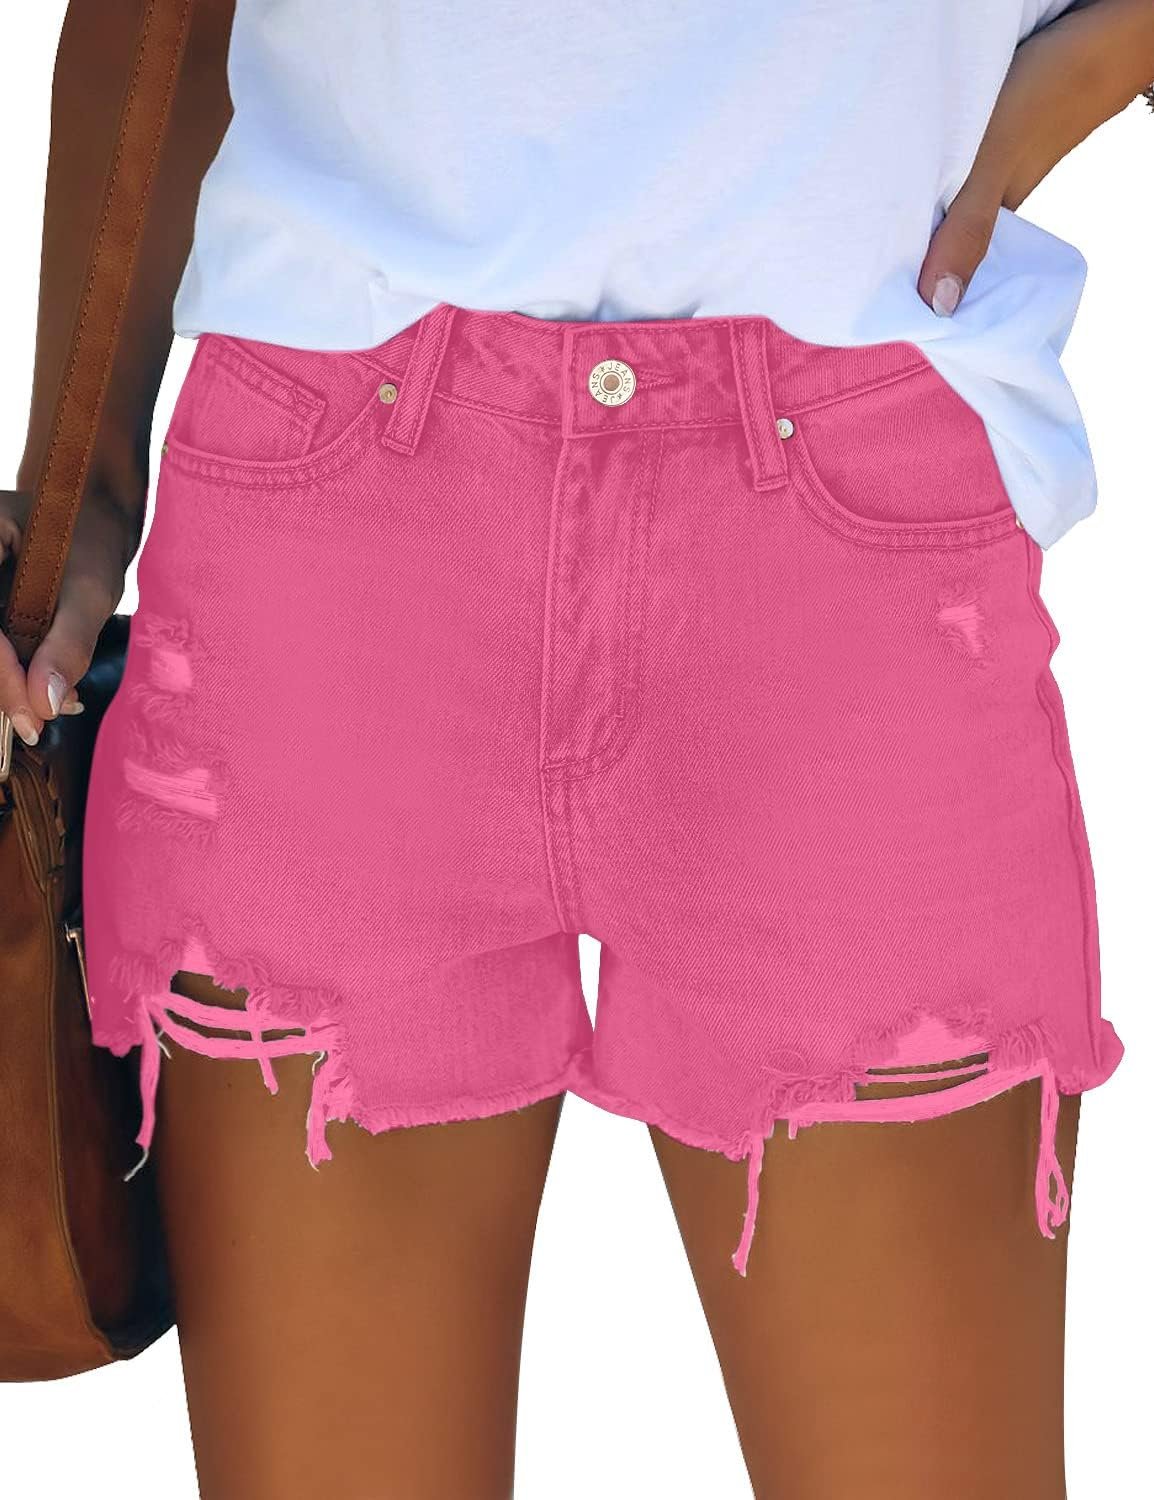 GRAPENT Womens High Waisted Ripped Stretchy Denim Hot Short Summer Jean Shorts